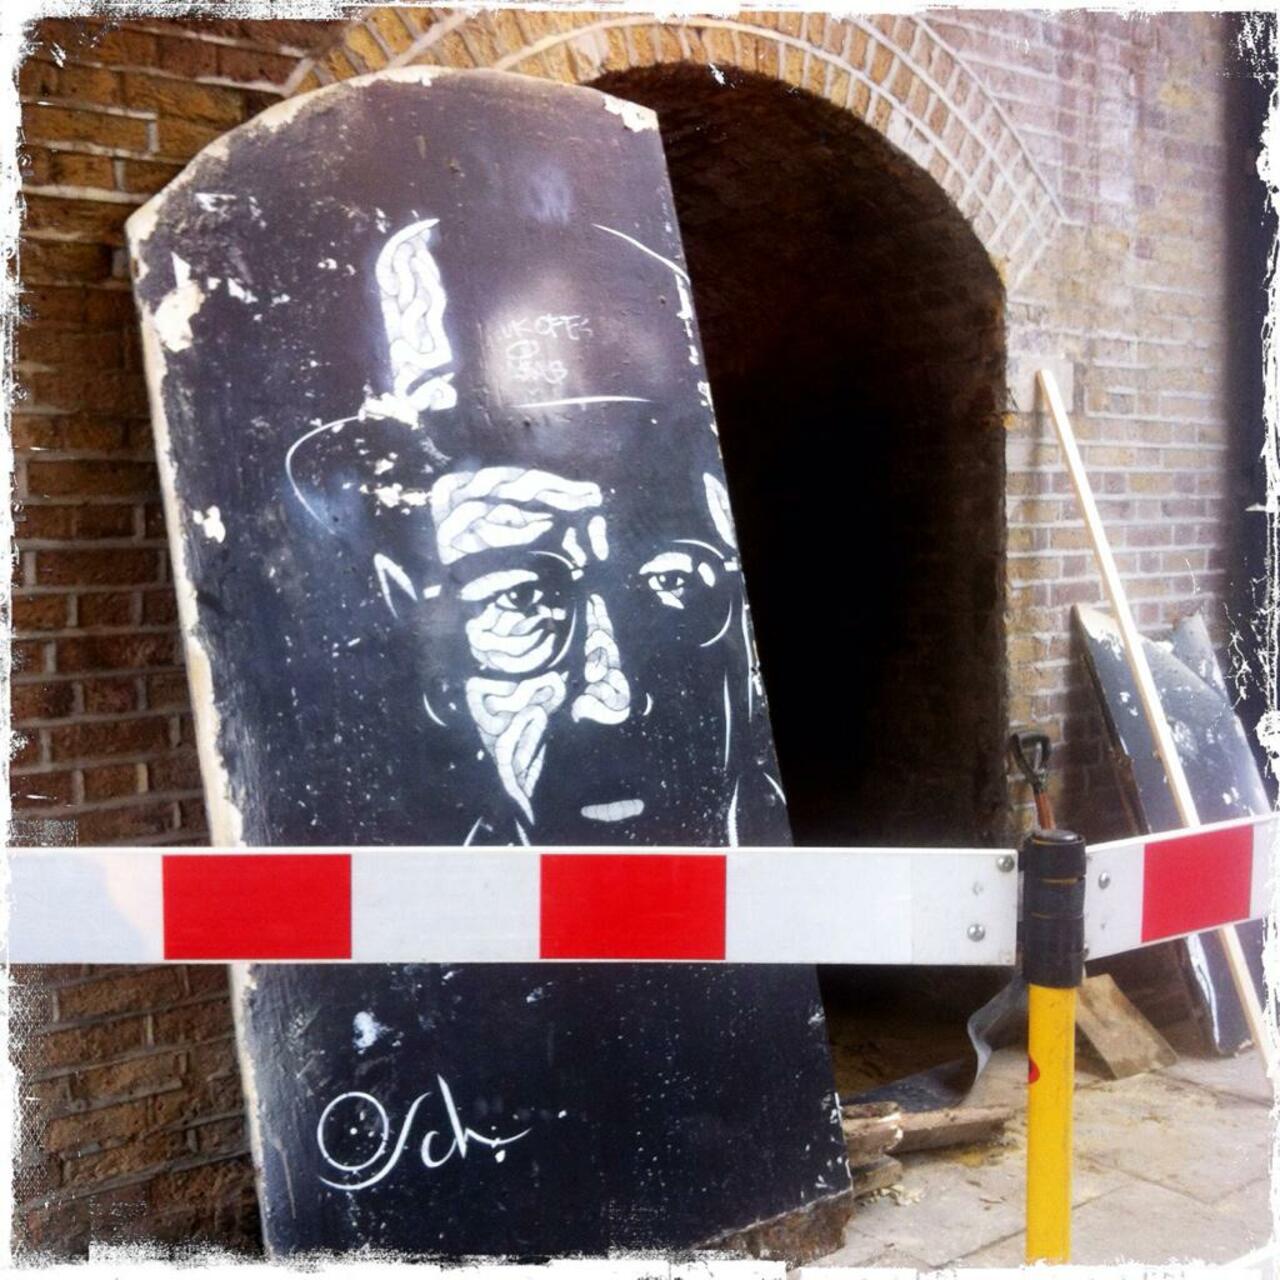 RT @BrickLaneArt: Dismantled work by @OttoSchade on Old Street #art #streetart #graffiti http://t.co/wGVFu8pjfV